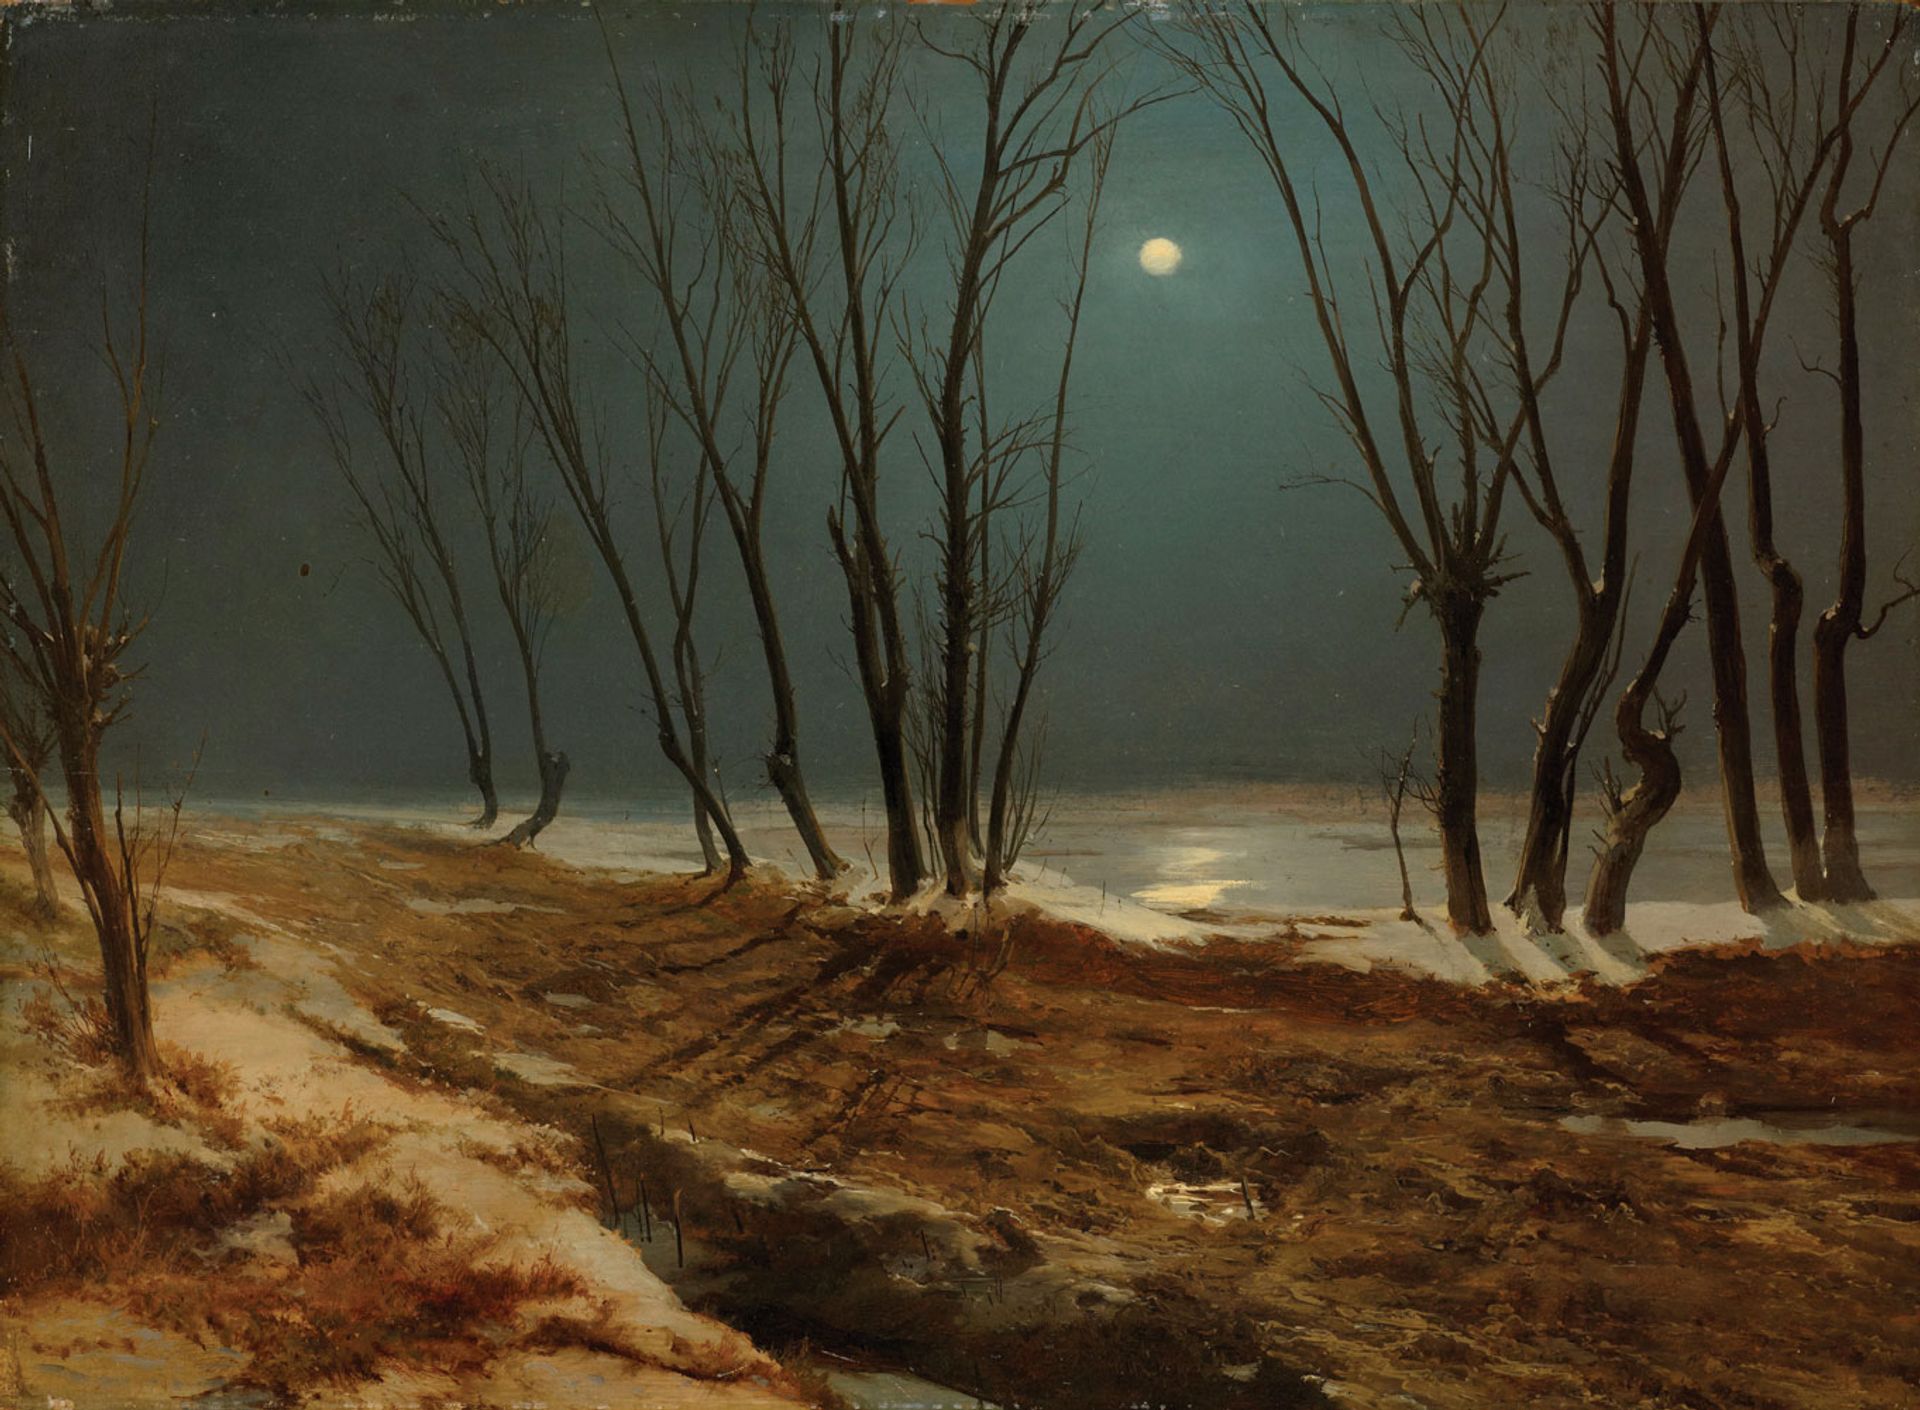 Country Road in Winter at Moonlight (1836) by Carl Blechen Museum Behnhaus Drägerhaus